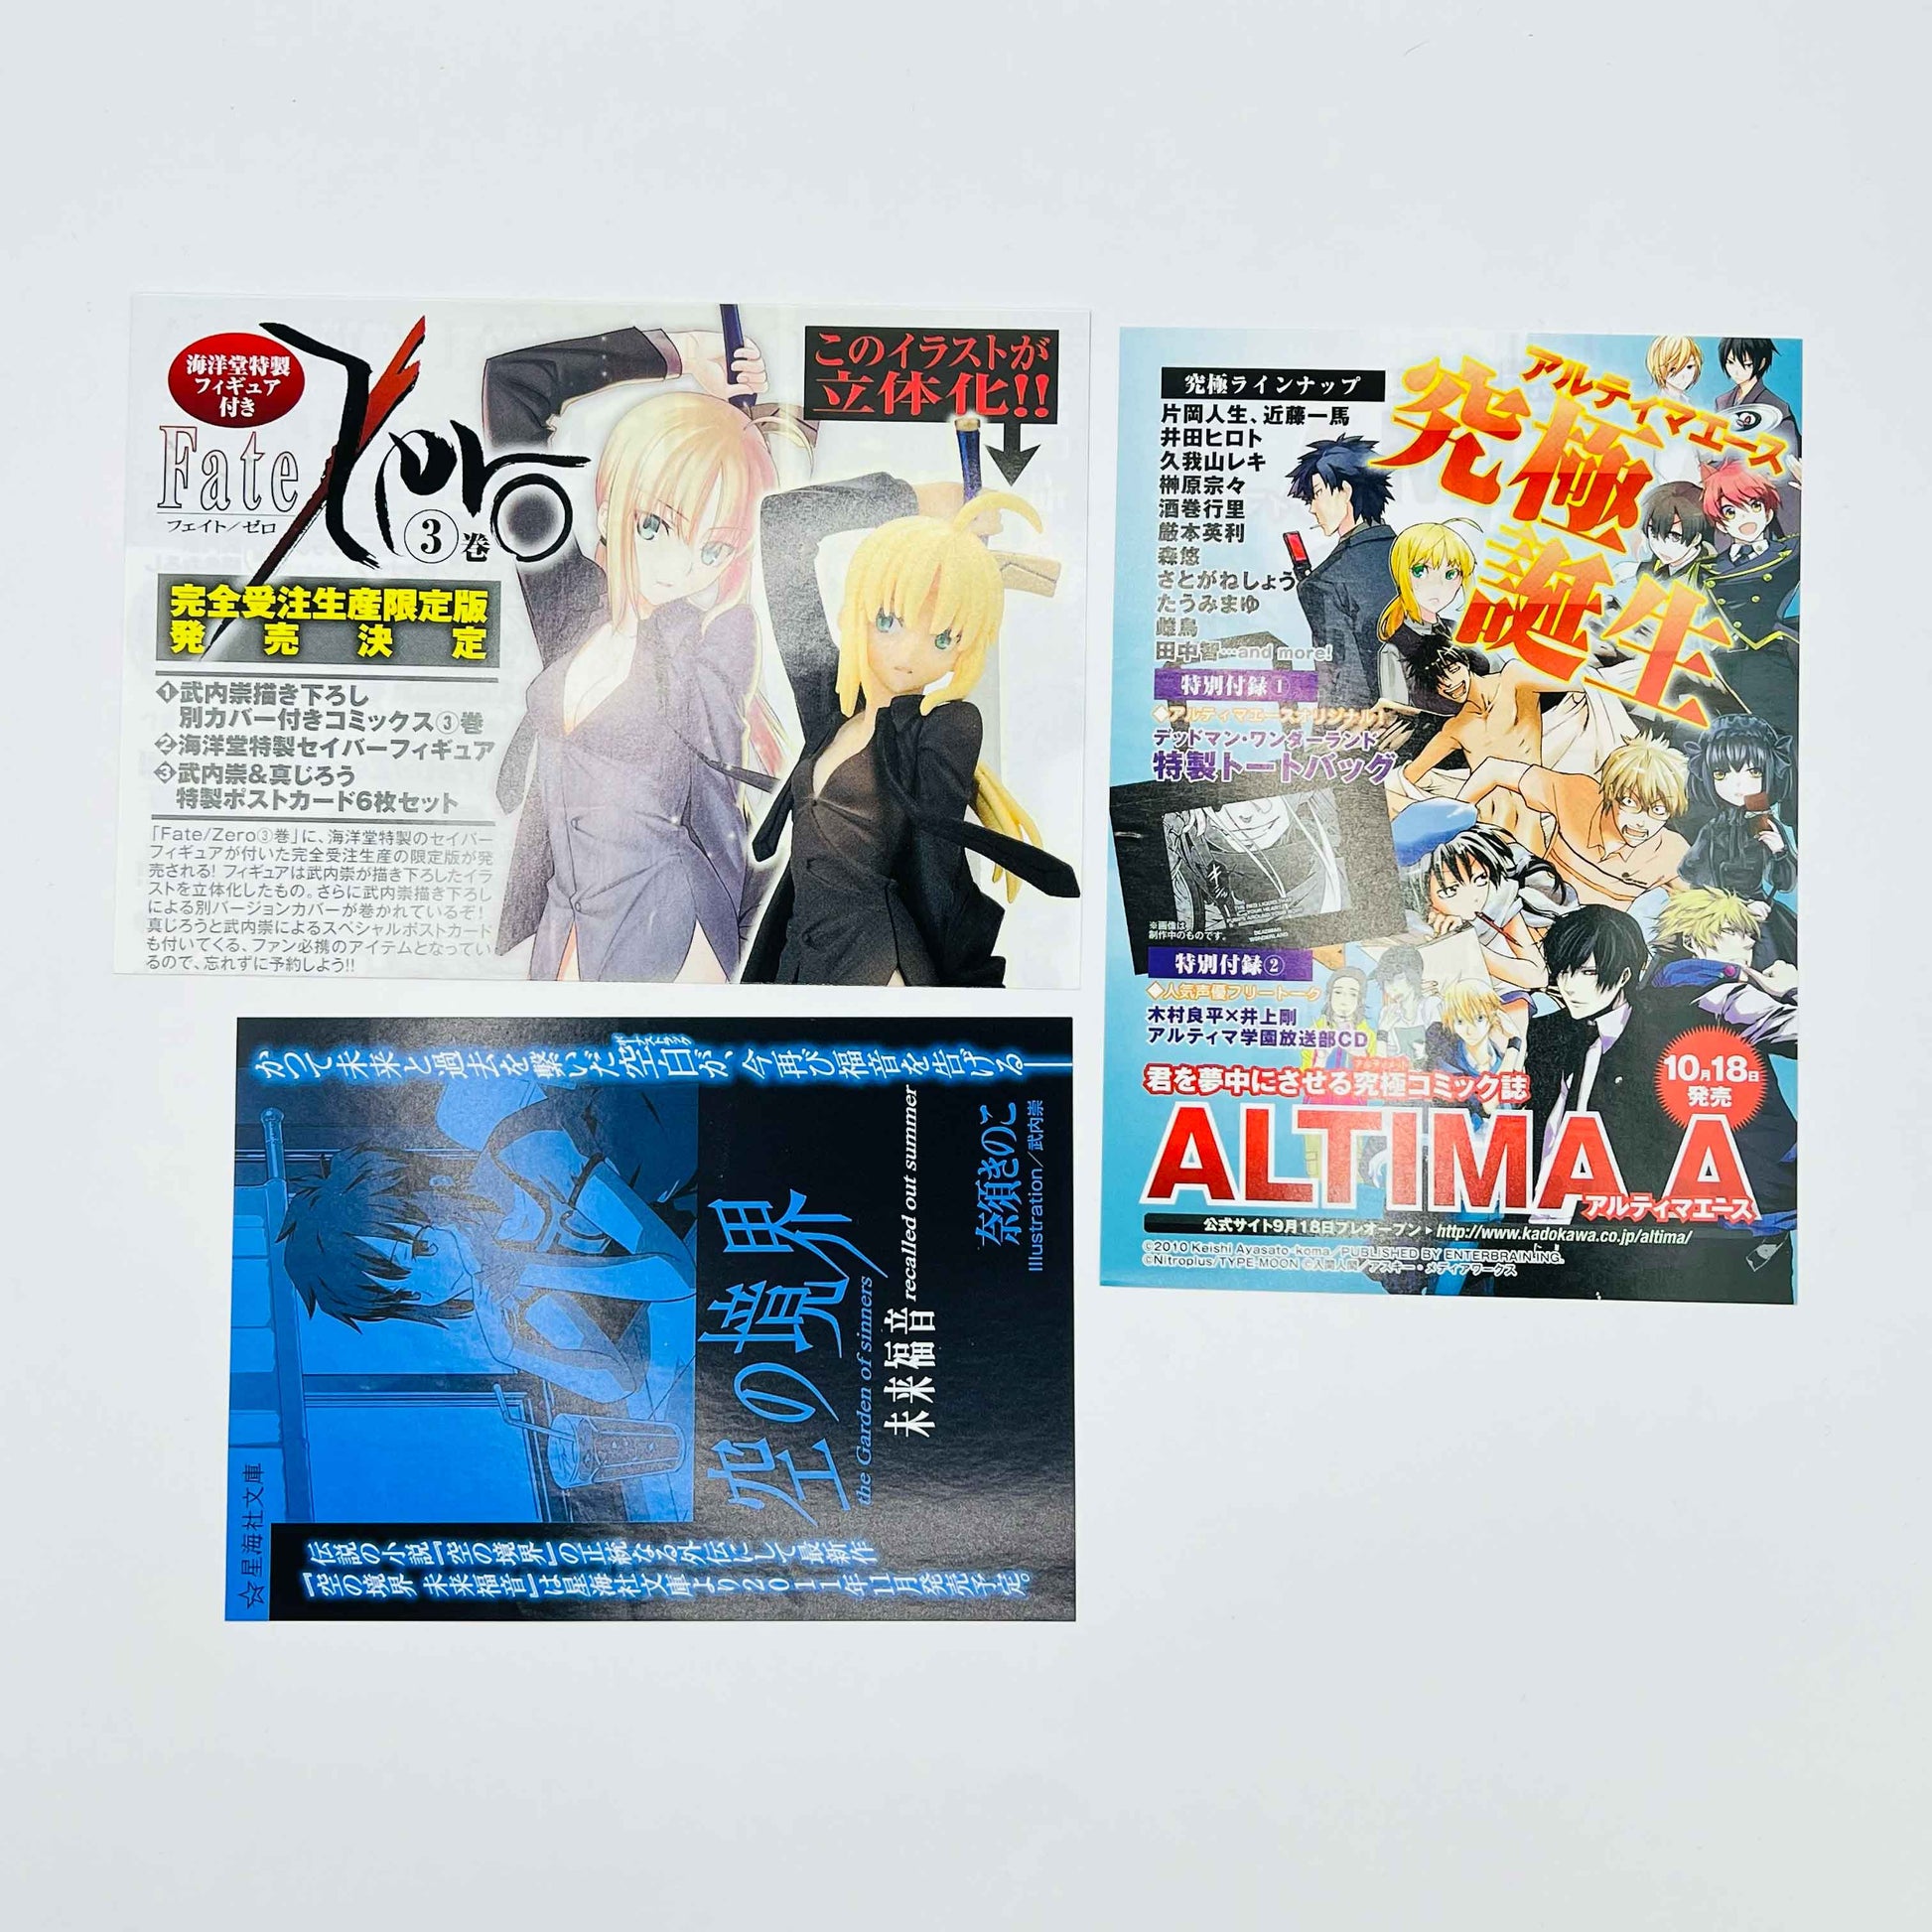 Fate / Zero - Volume 01 02 03 Limited Edition - 1stPrint.net - 1st First Print Edition Manga Store - M-FATE-LOT-001